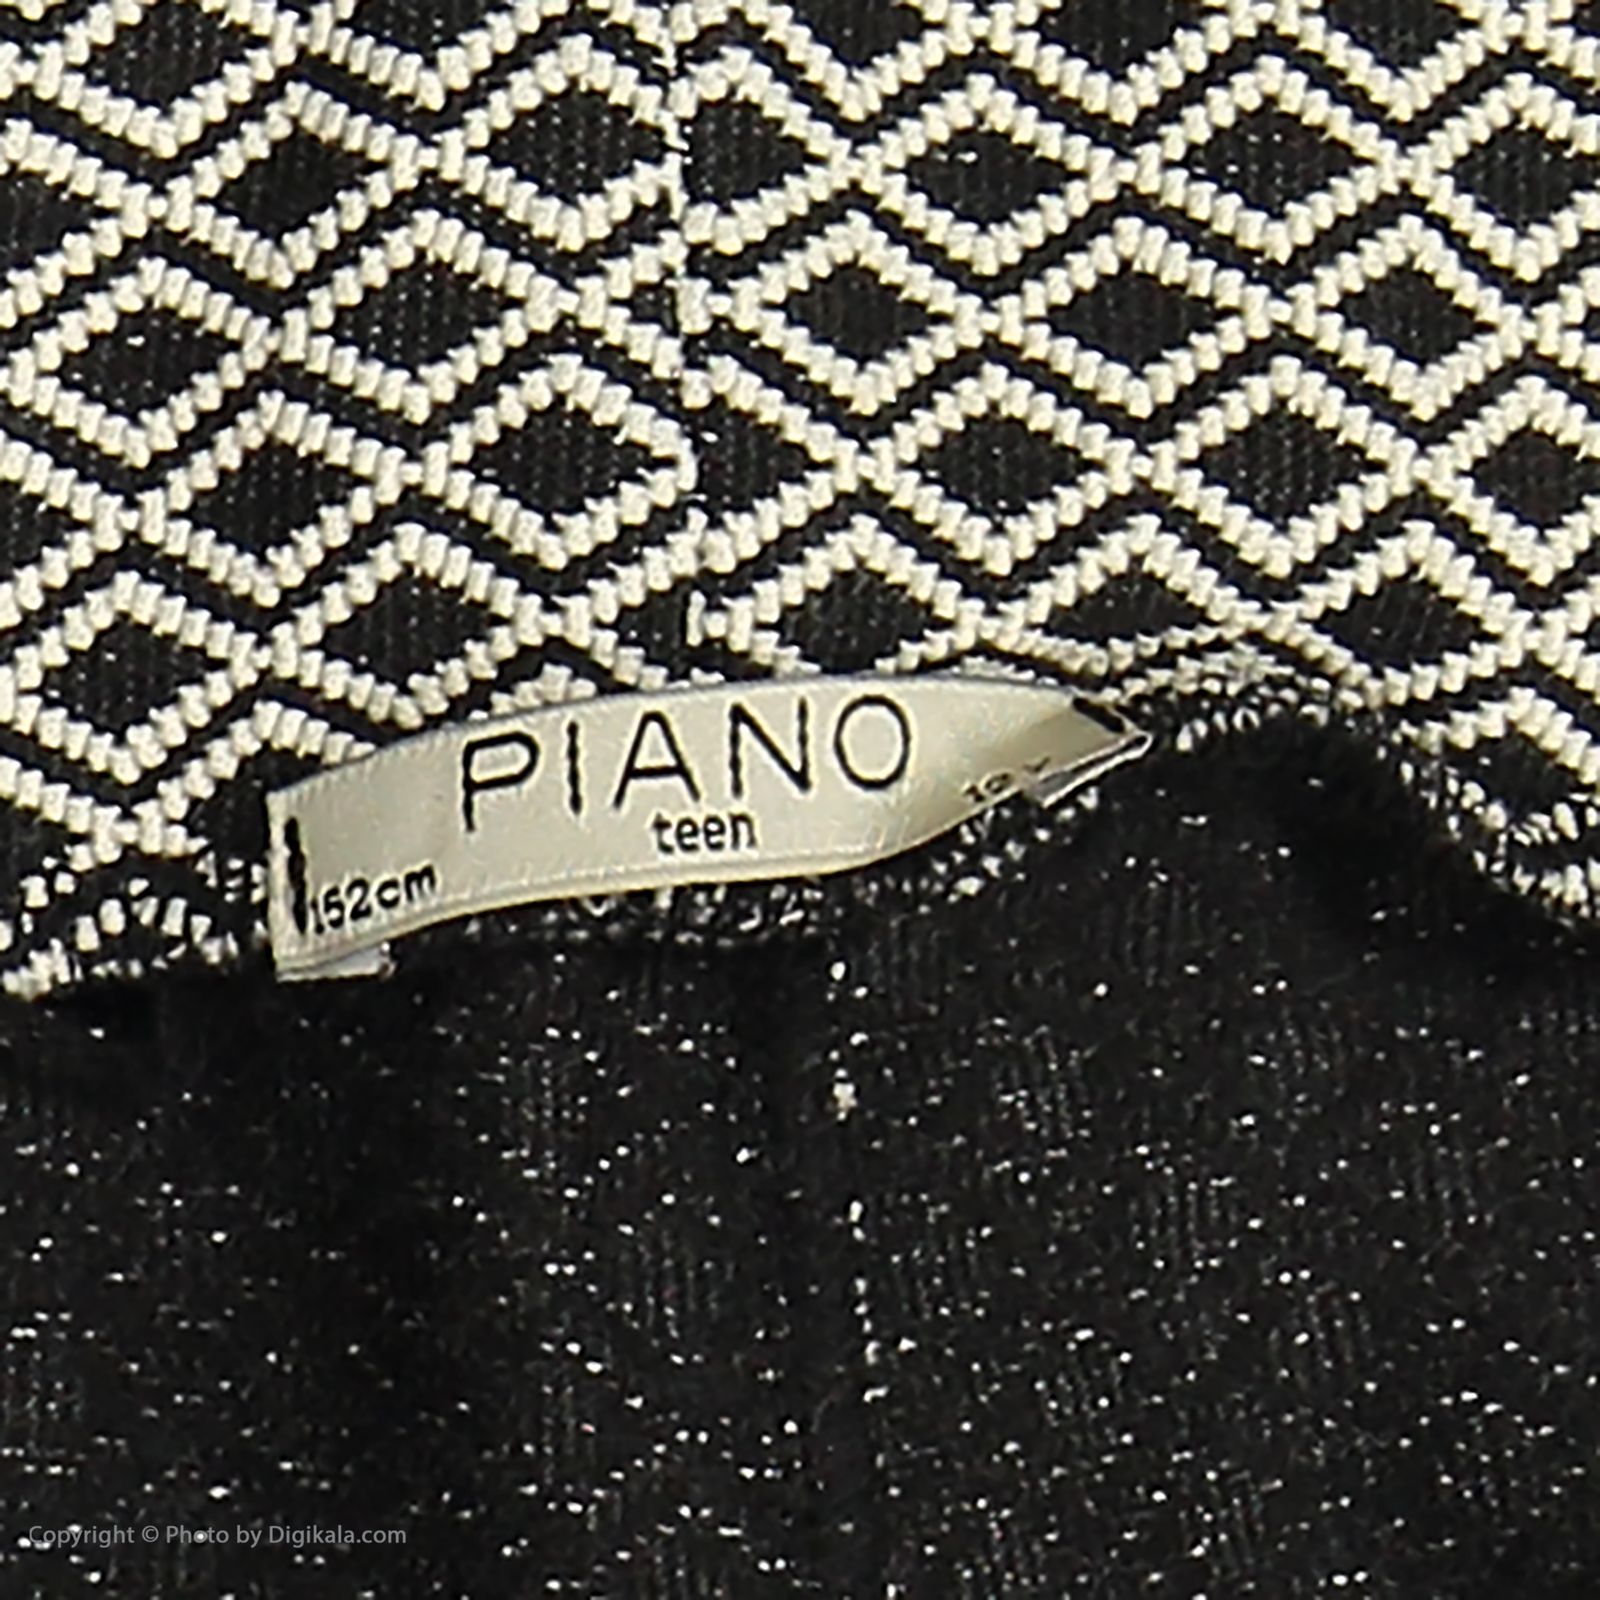 شلوار دخترانه پیانو مدل 1009009901600-99 -  - 5